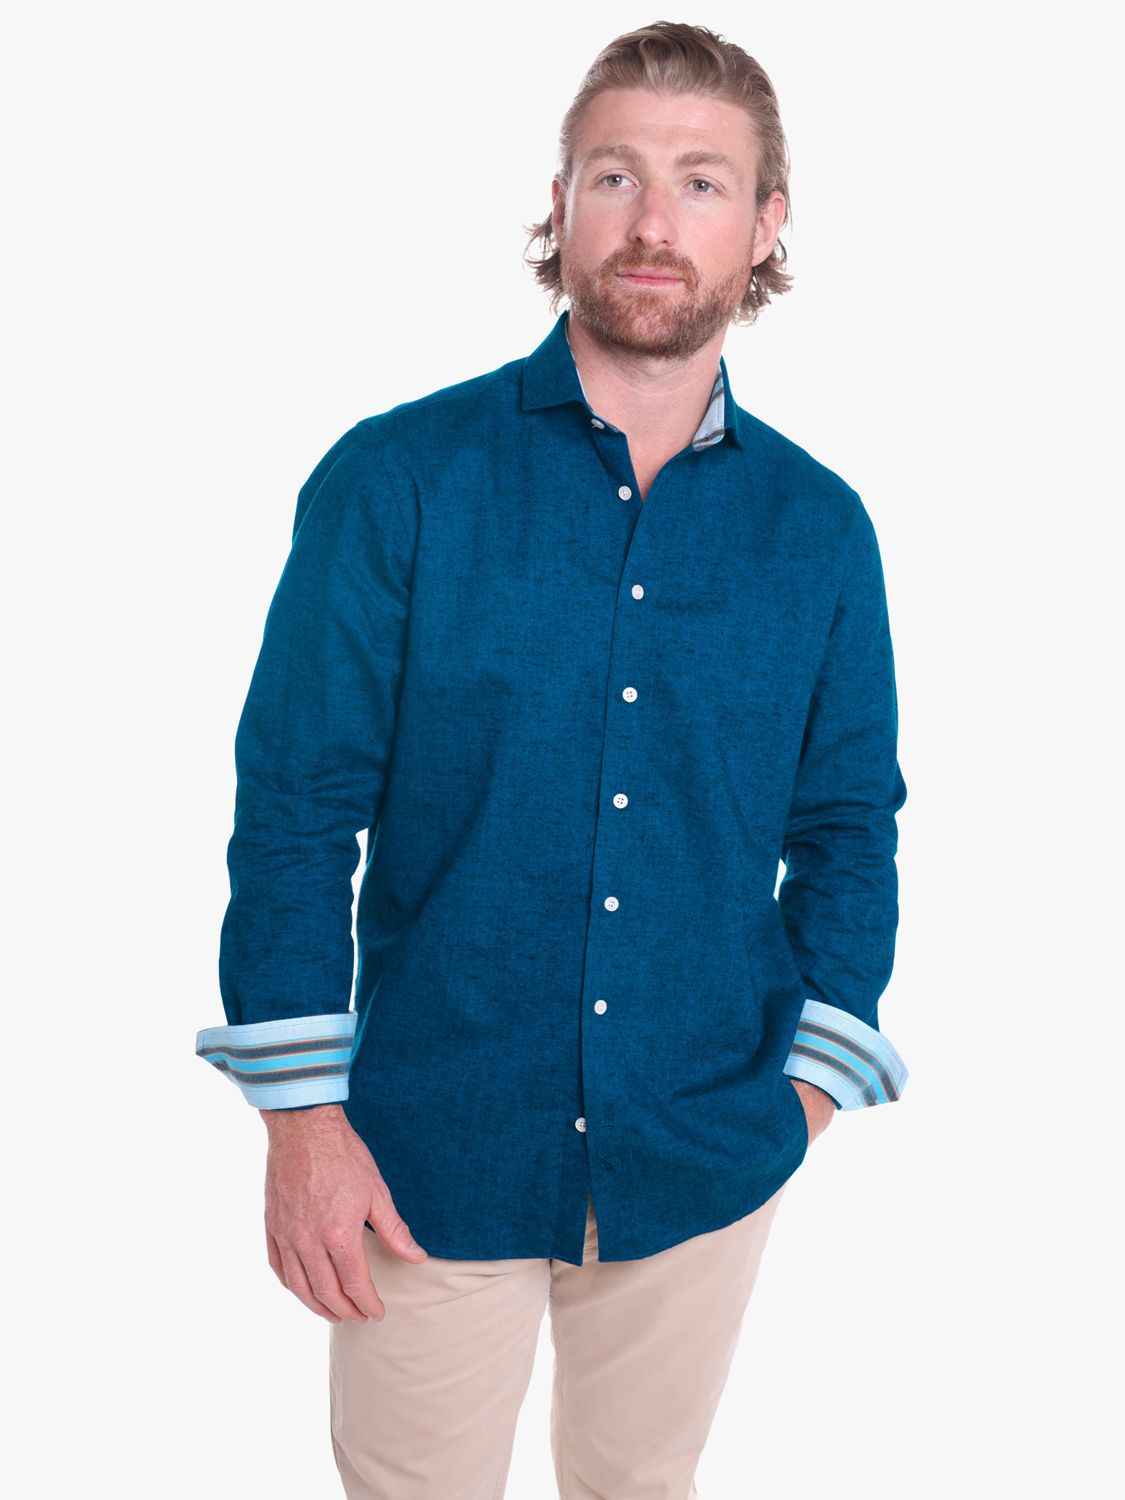 Buy KOY Cheza Cotton Linen Shirt, Navy Online at johnlewis.com